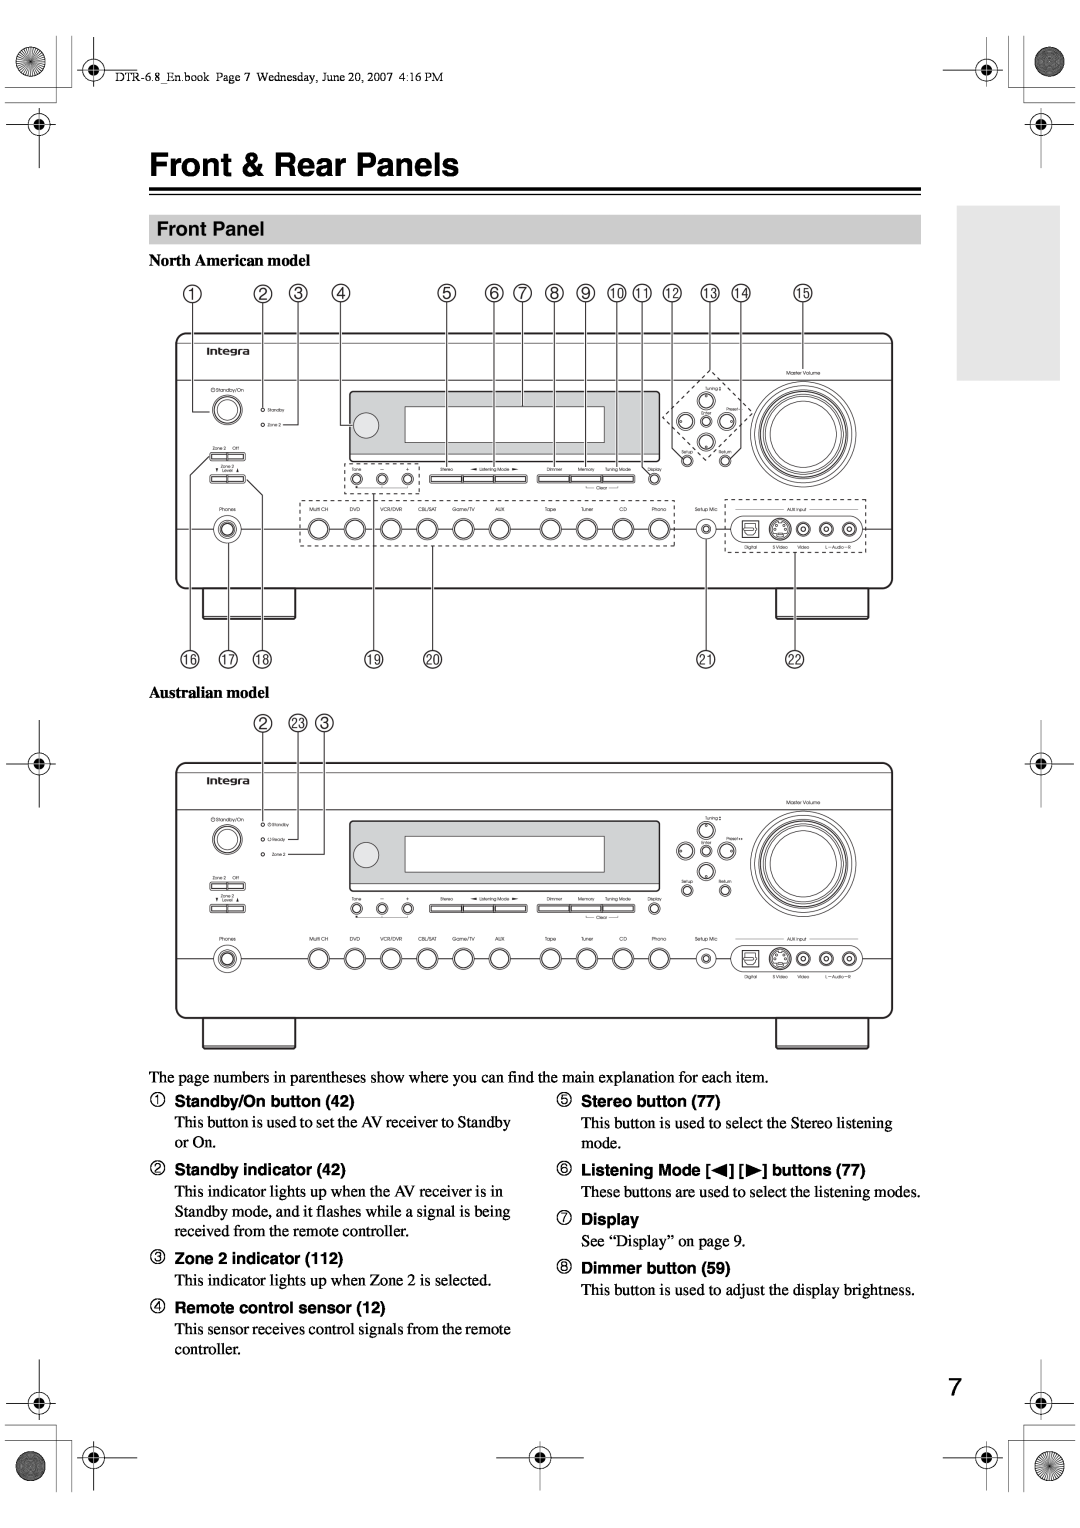 Integra DTR-6.8 Front & Rear Panels, Front Panel, North American model, Australian model, 1 2 3, bq br bs, 2 cn3 